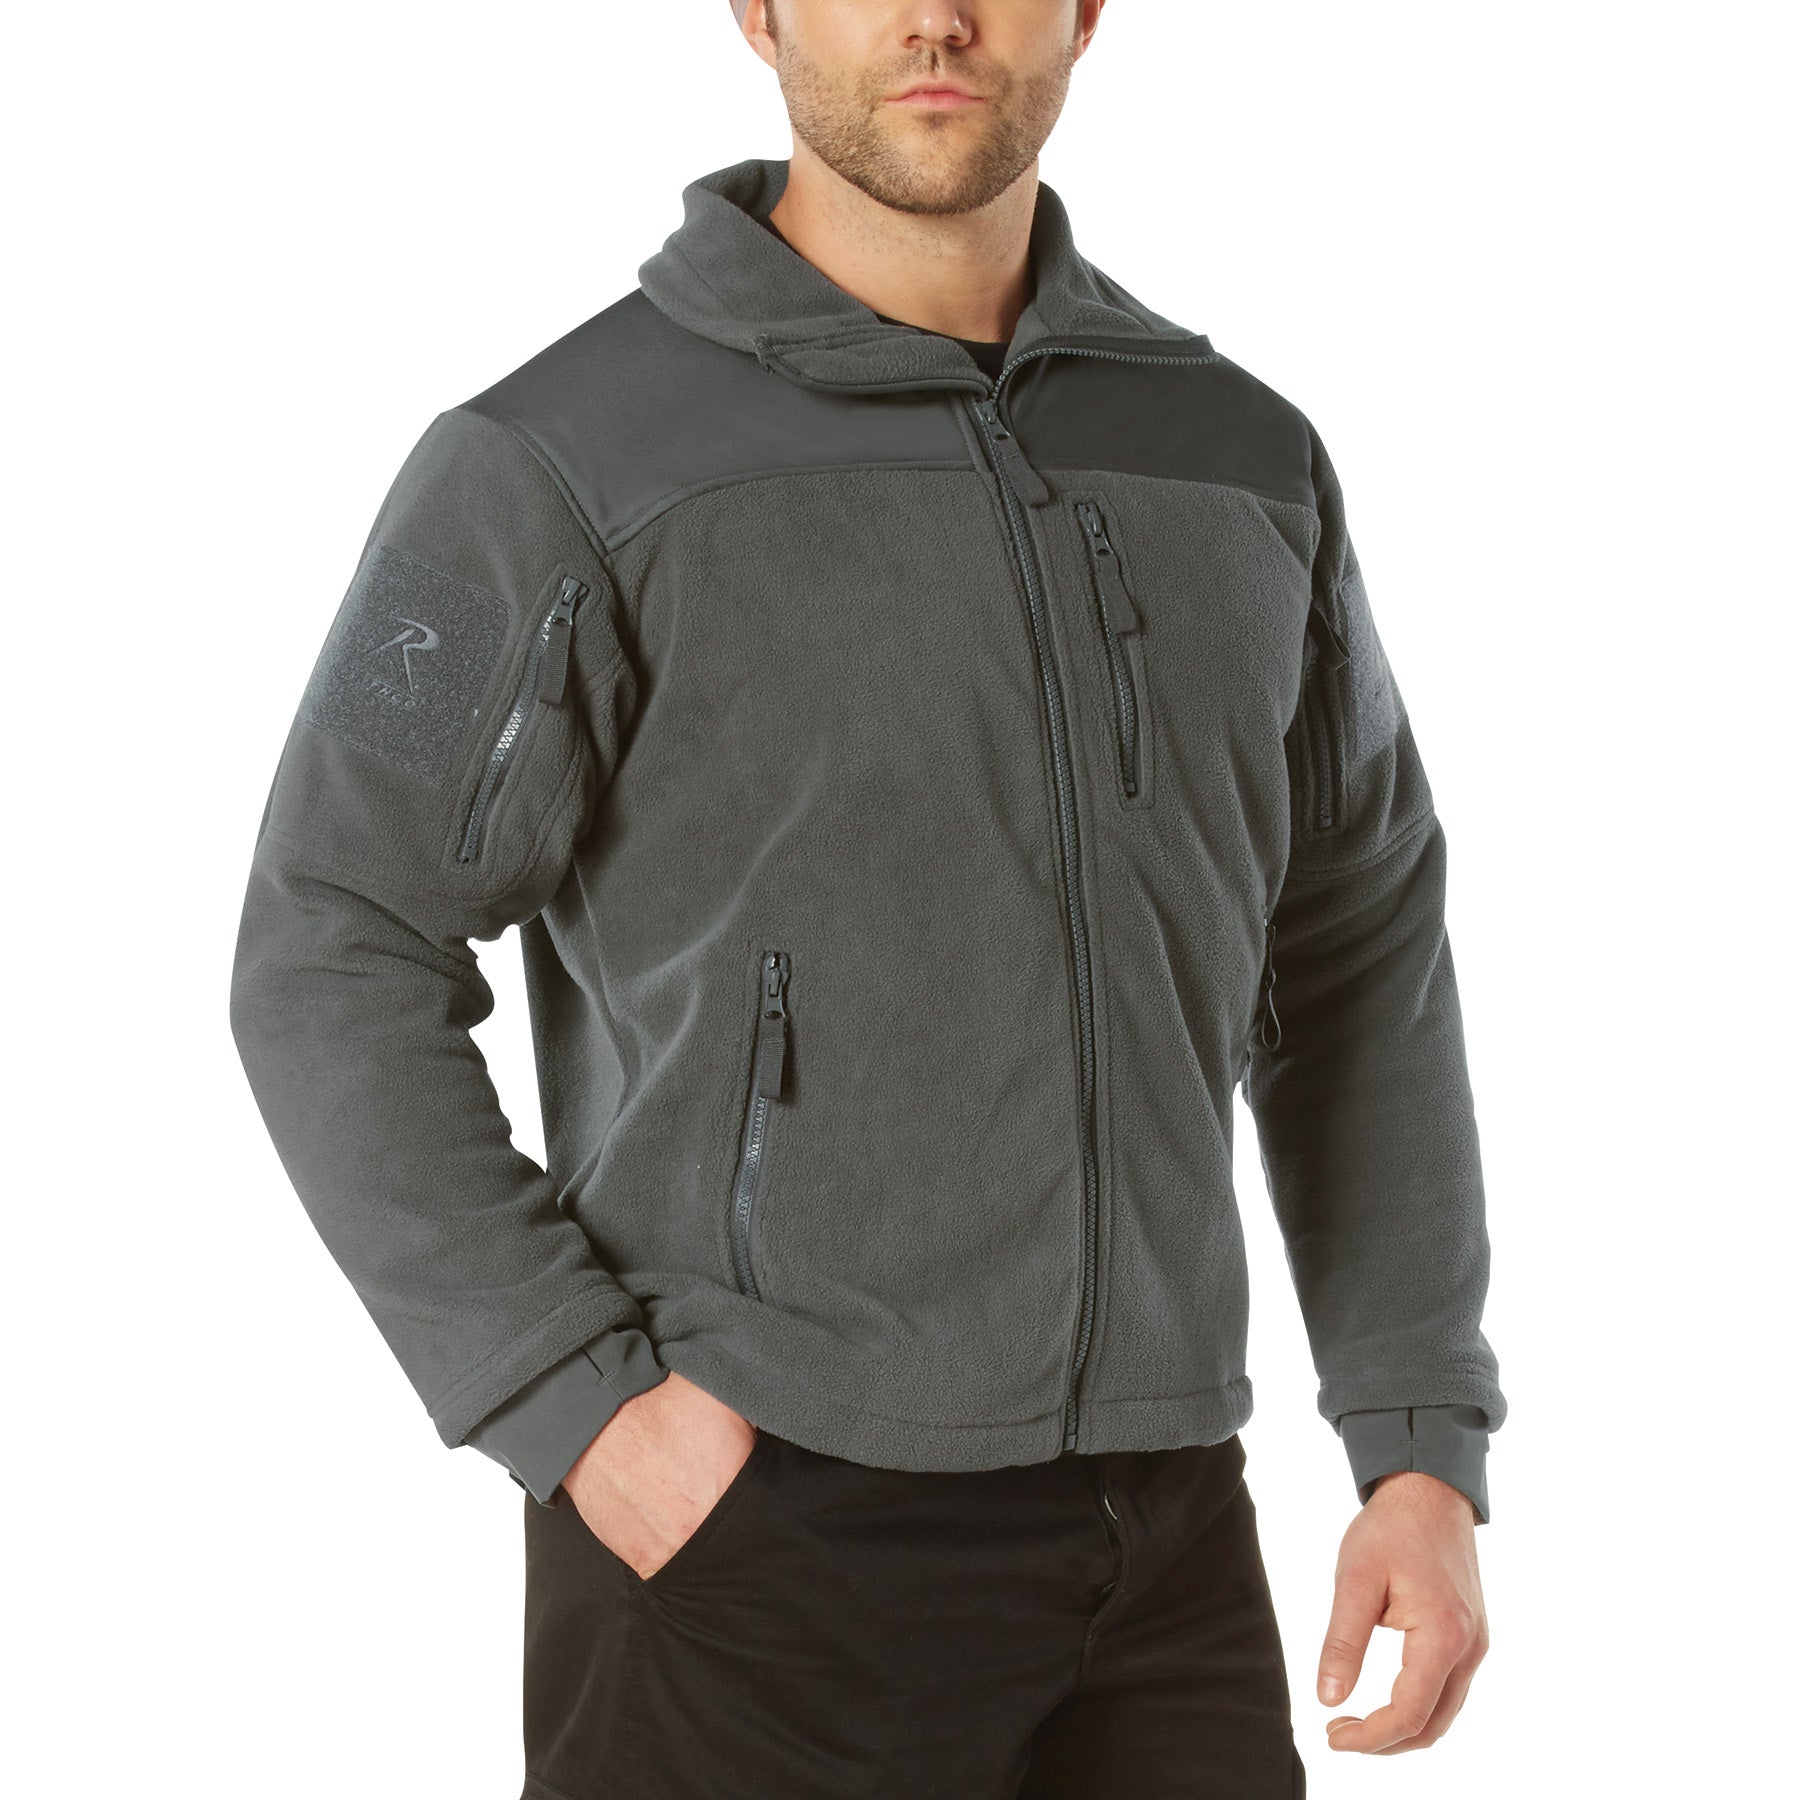 Poly Spec Ops Tactical Fleece Jackets Charcoal Grey